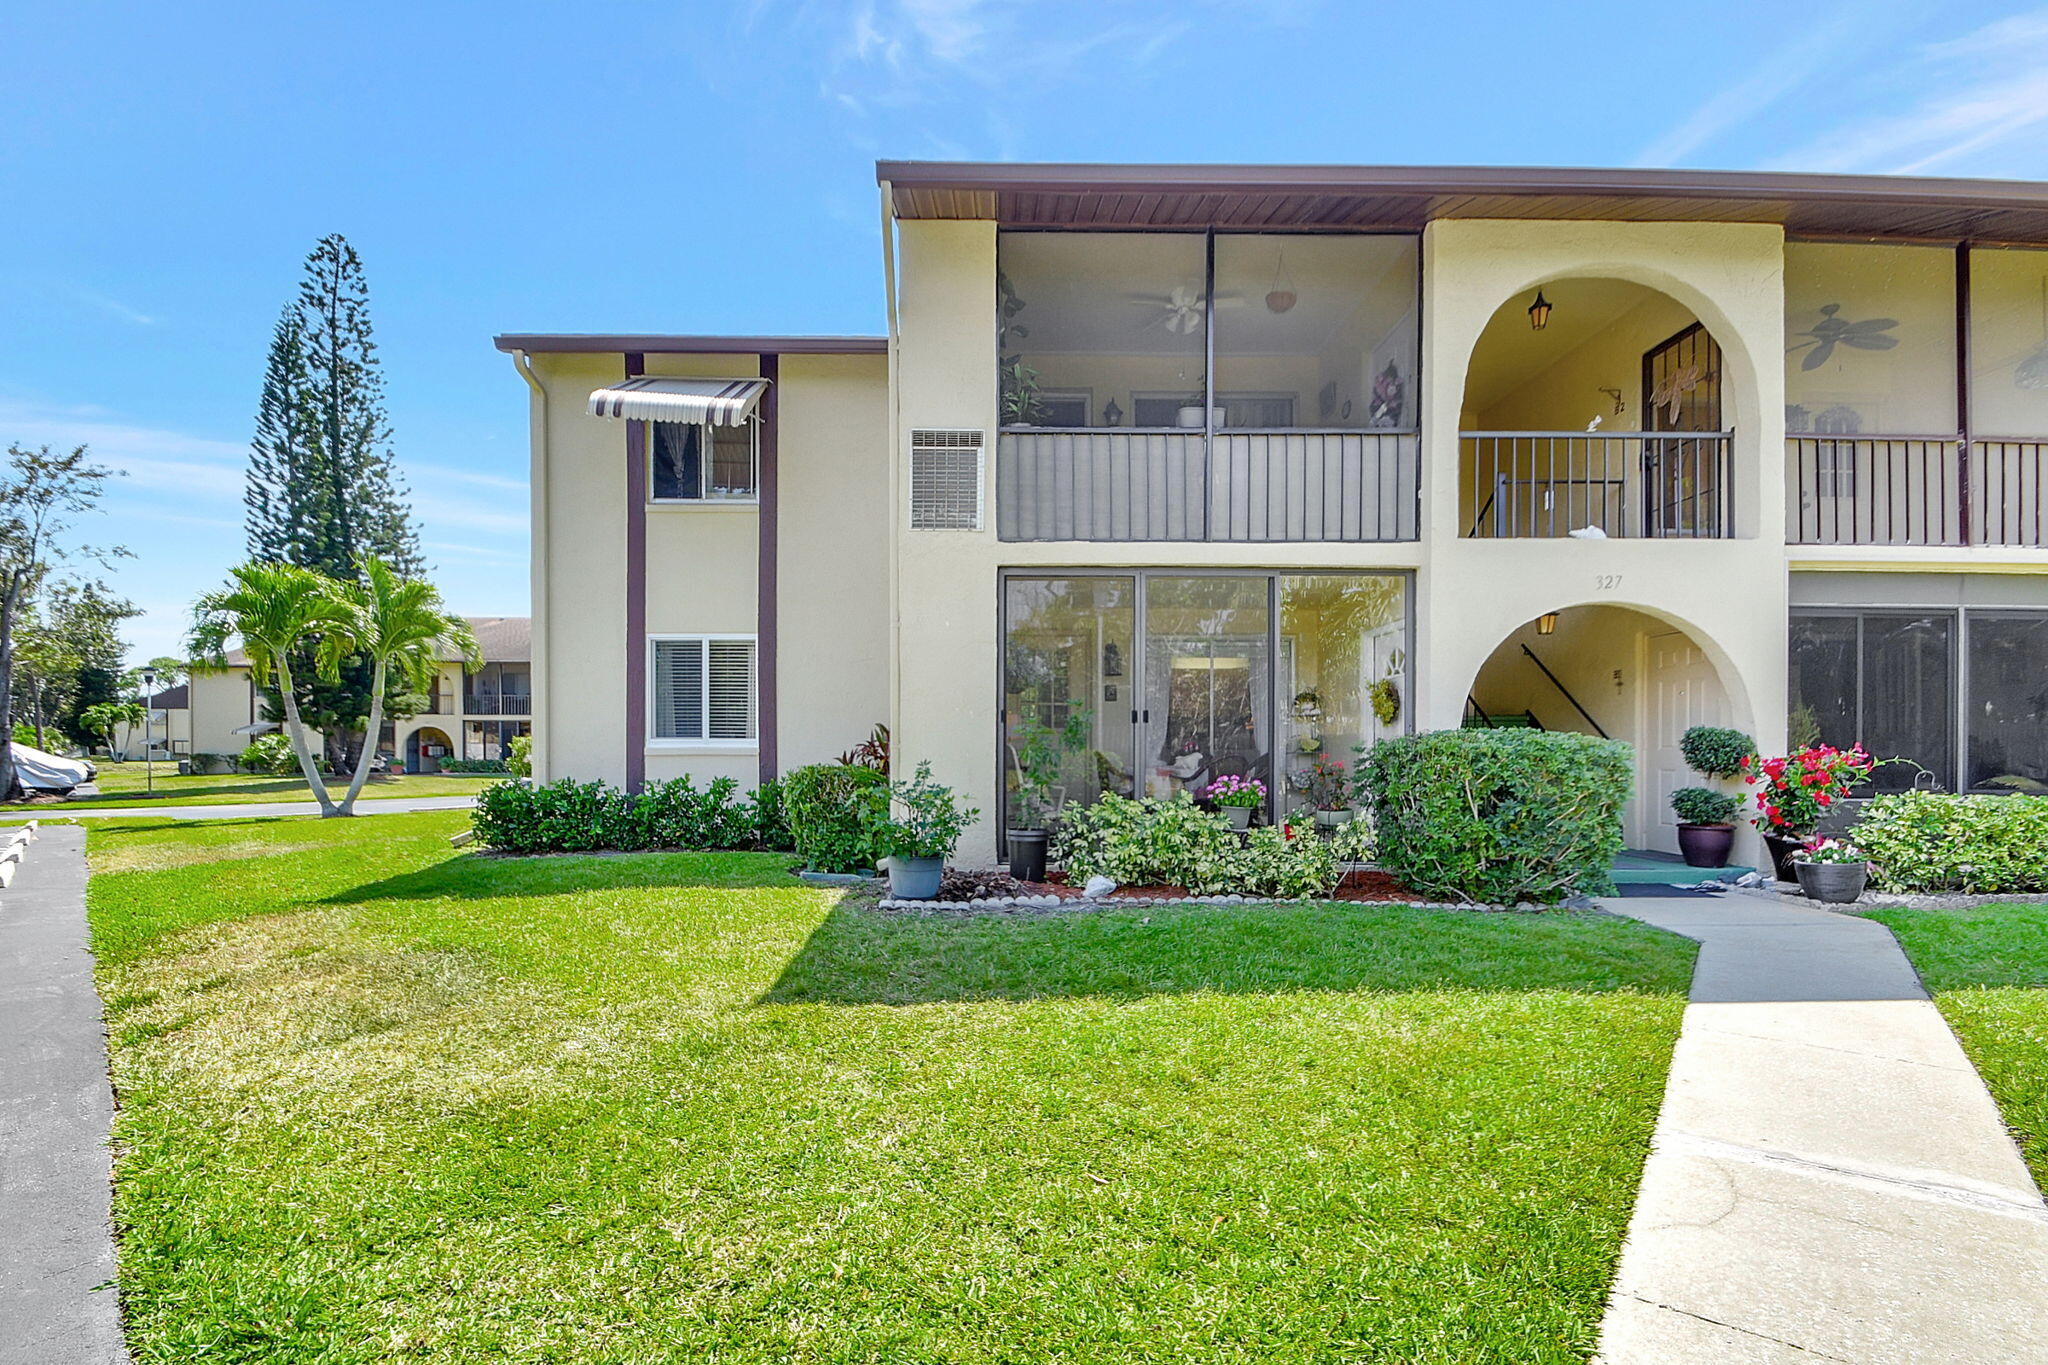 Property for Sale at 327 Pine Ridge Circle C-1, Greenacres, Palm Beach County, Florida - Bedrooms: 2 
Bathrooms: 1  - $139,000